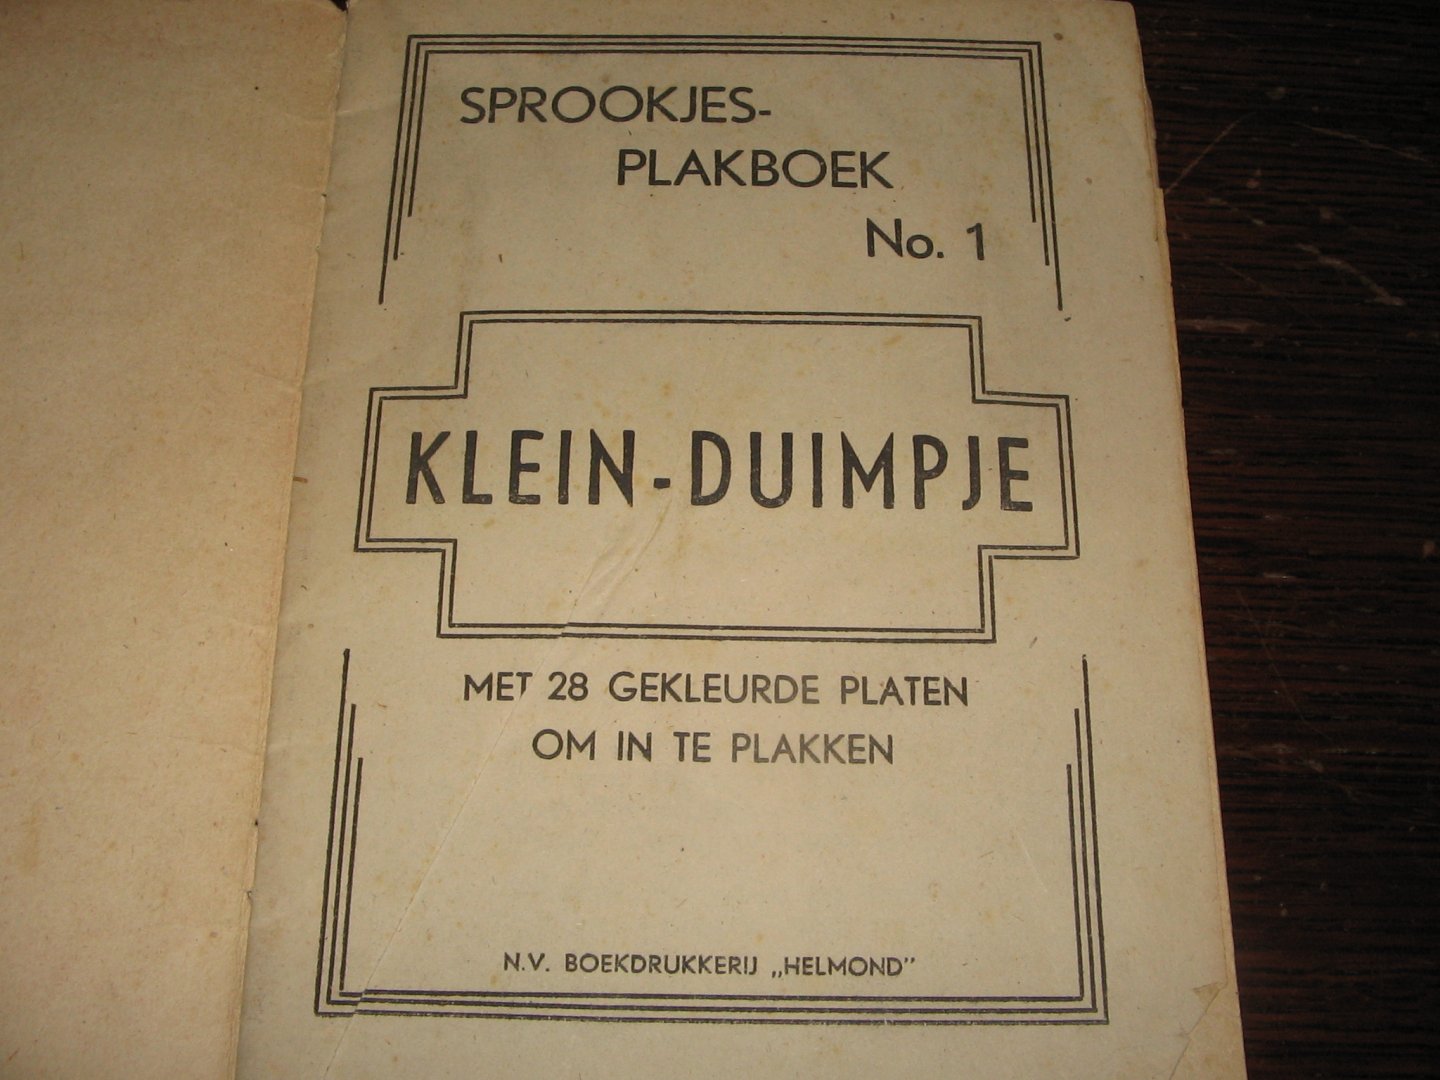 Loon, Jaap van - Klein Duimpje / met 28 gekleurde plaatjes om in te plakken / Sprookjes plakboek No. 1